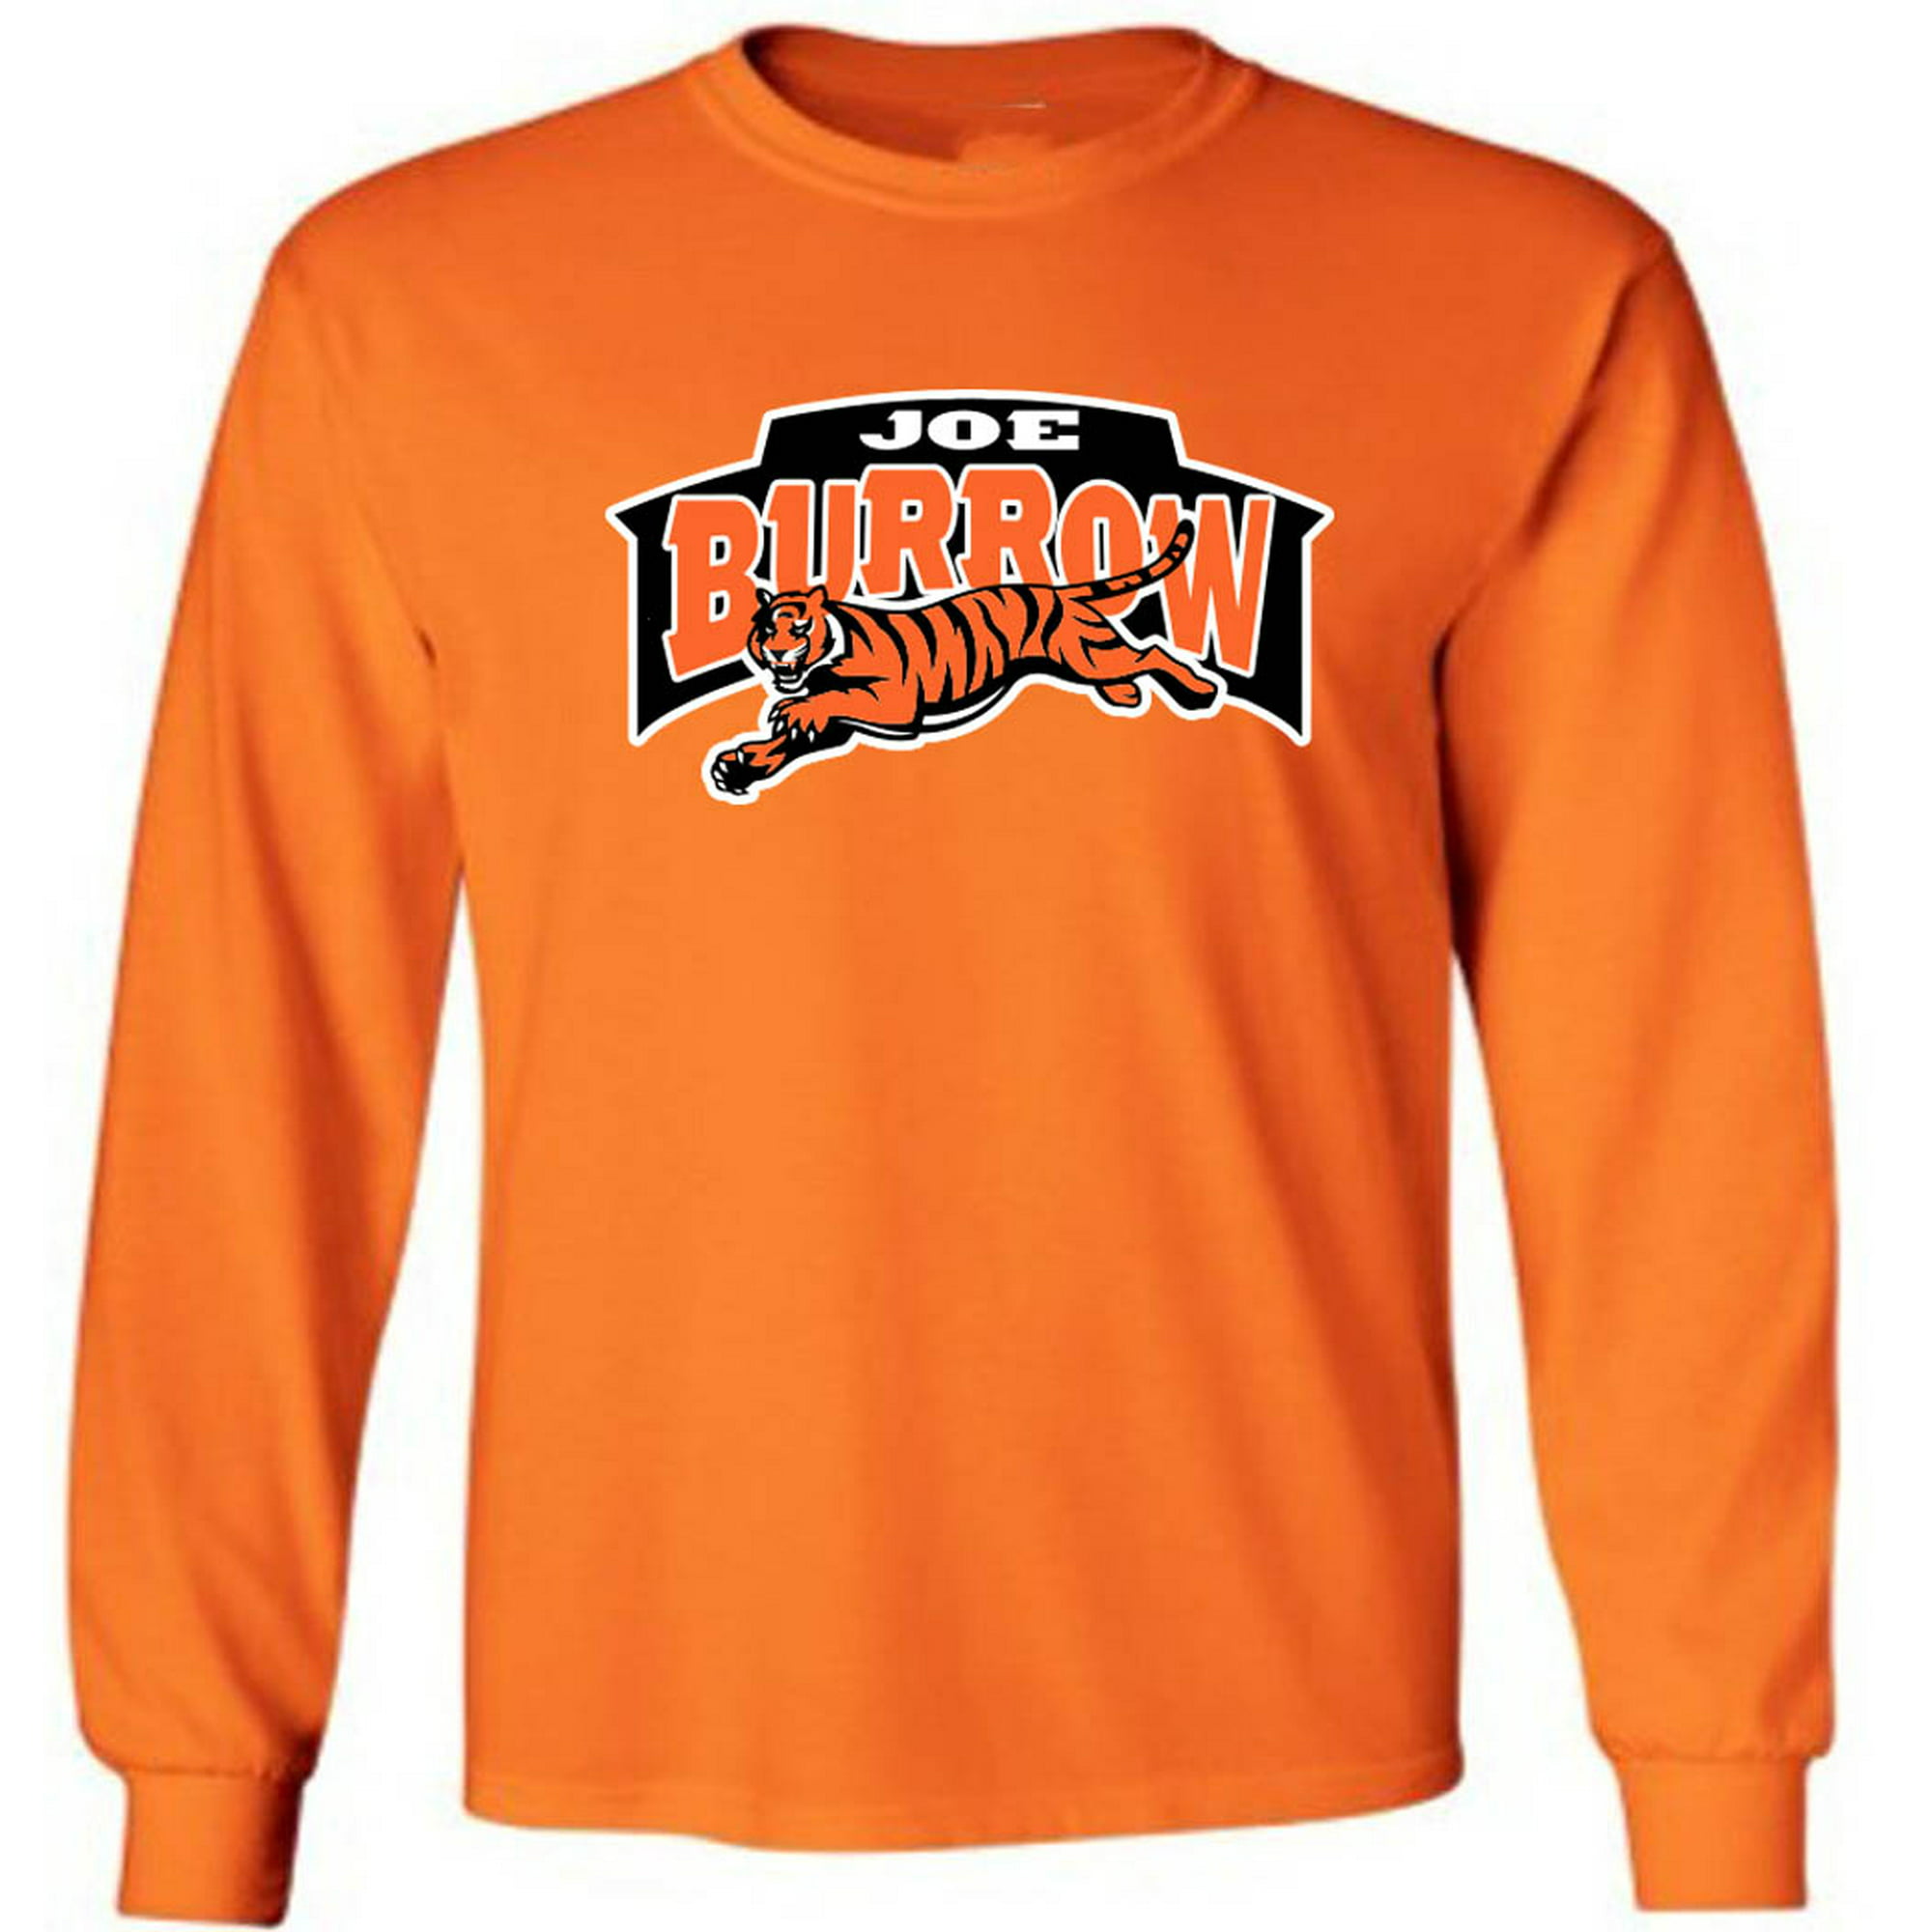 Shedd Shirts Long Sleeve Orange Bengals Joe Burrow Logo T-Shirt Youth, Boy's, Size: YS(6-8)